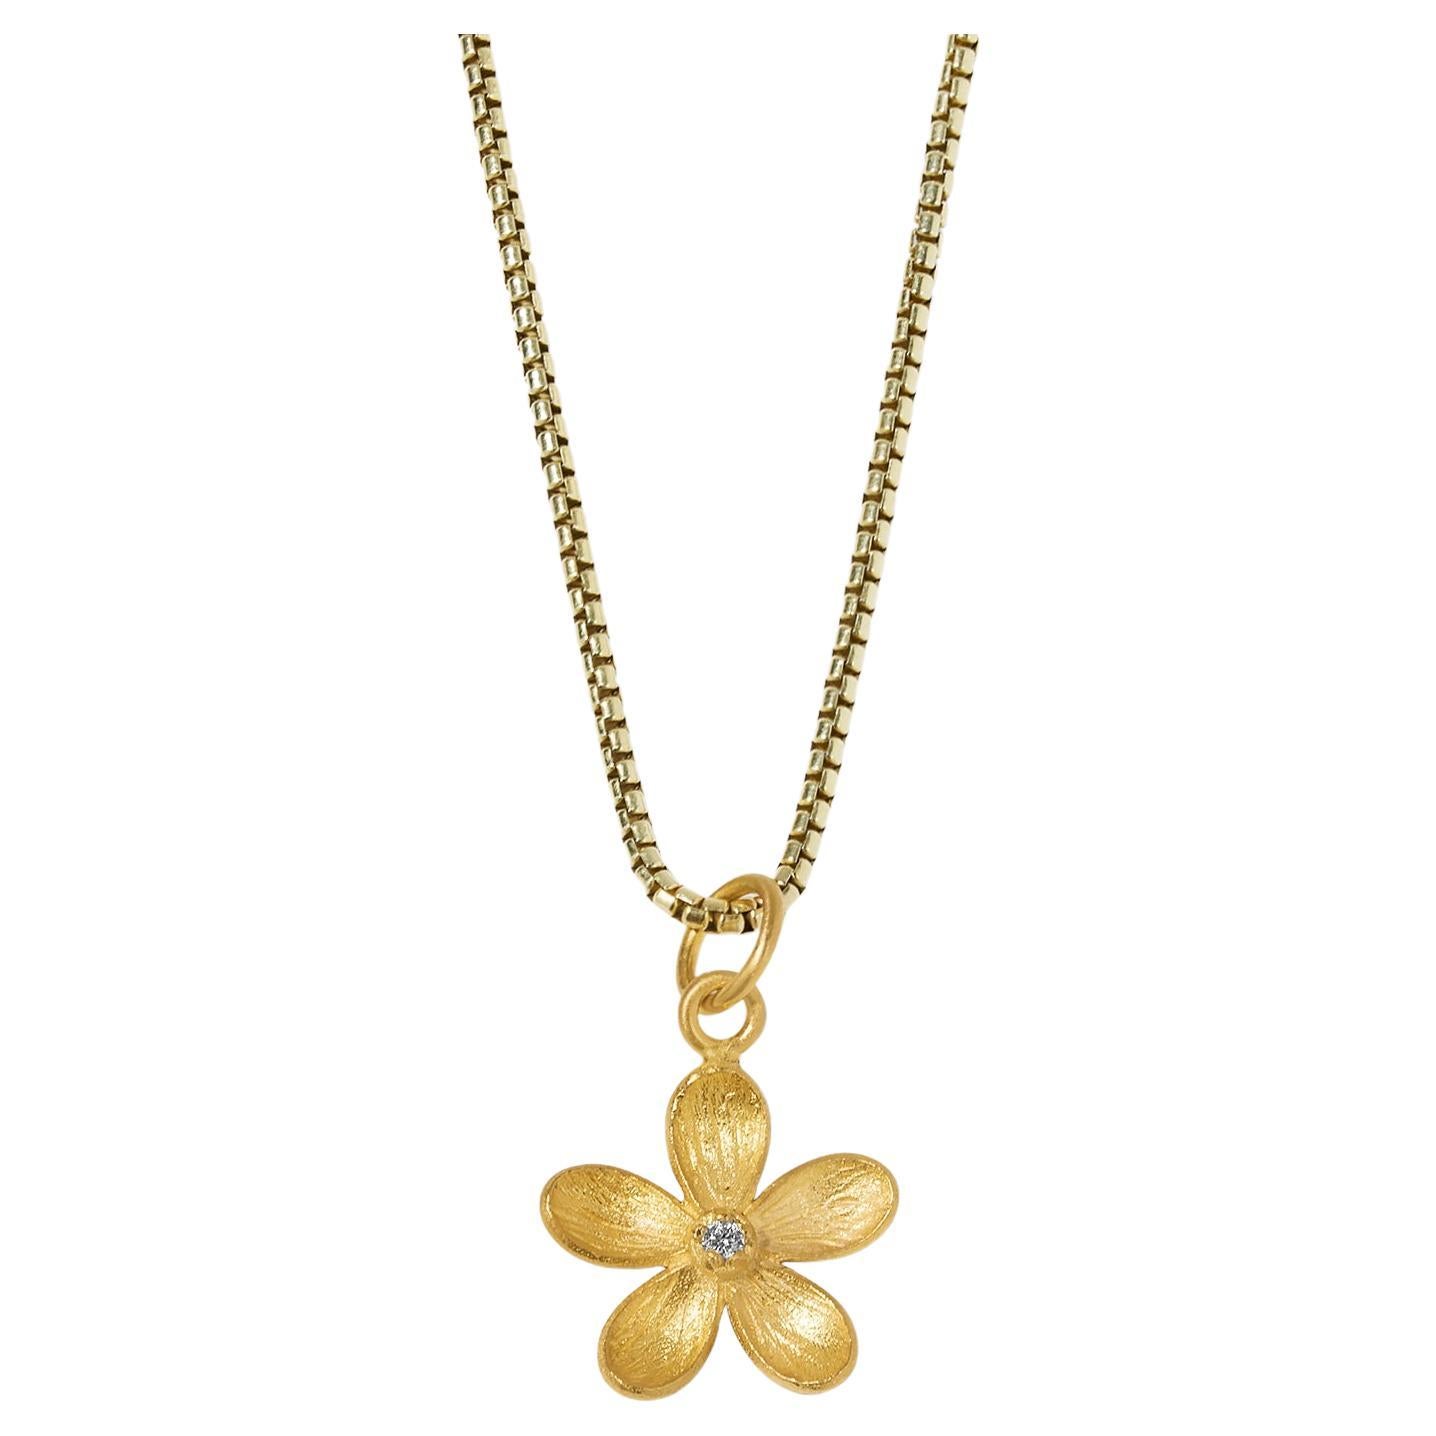 5 Petal Pentas Flower Charm Pendant Necklace with Center Diamond, 24kt Gold